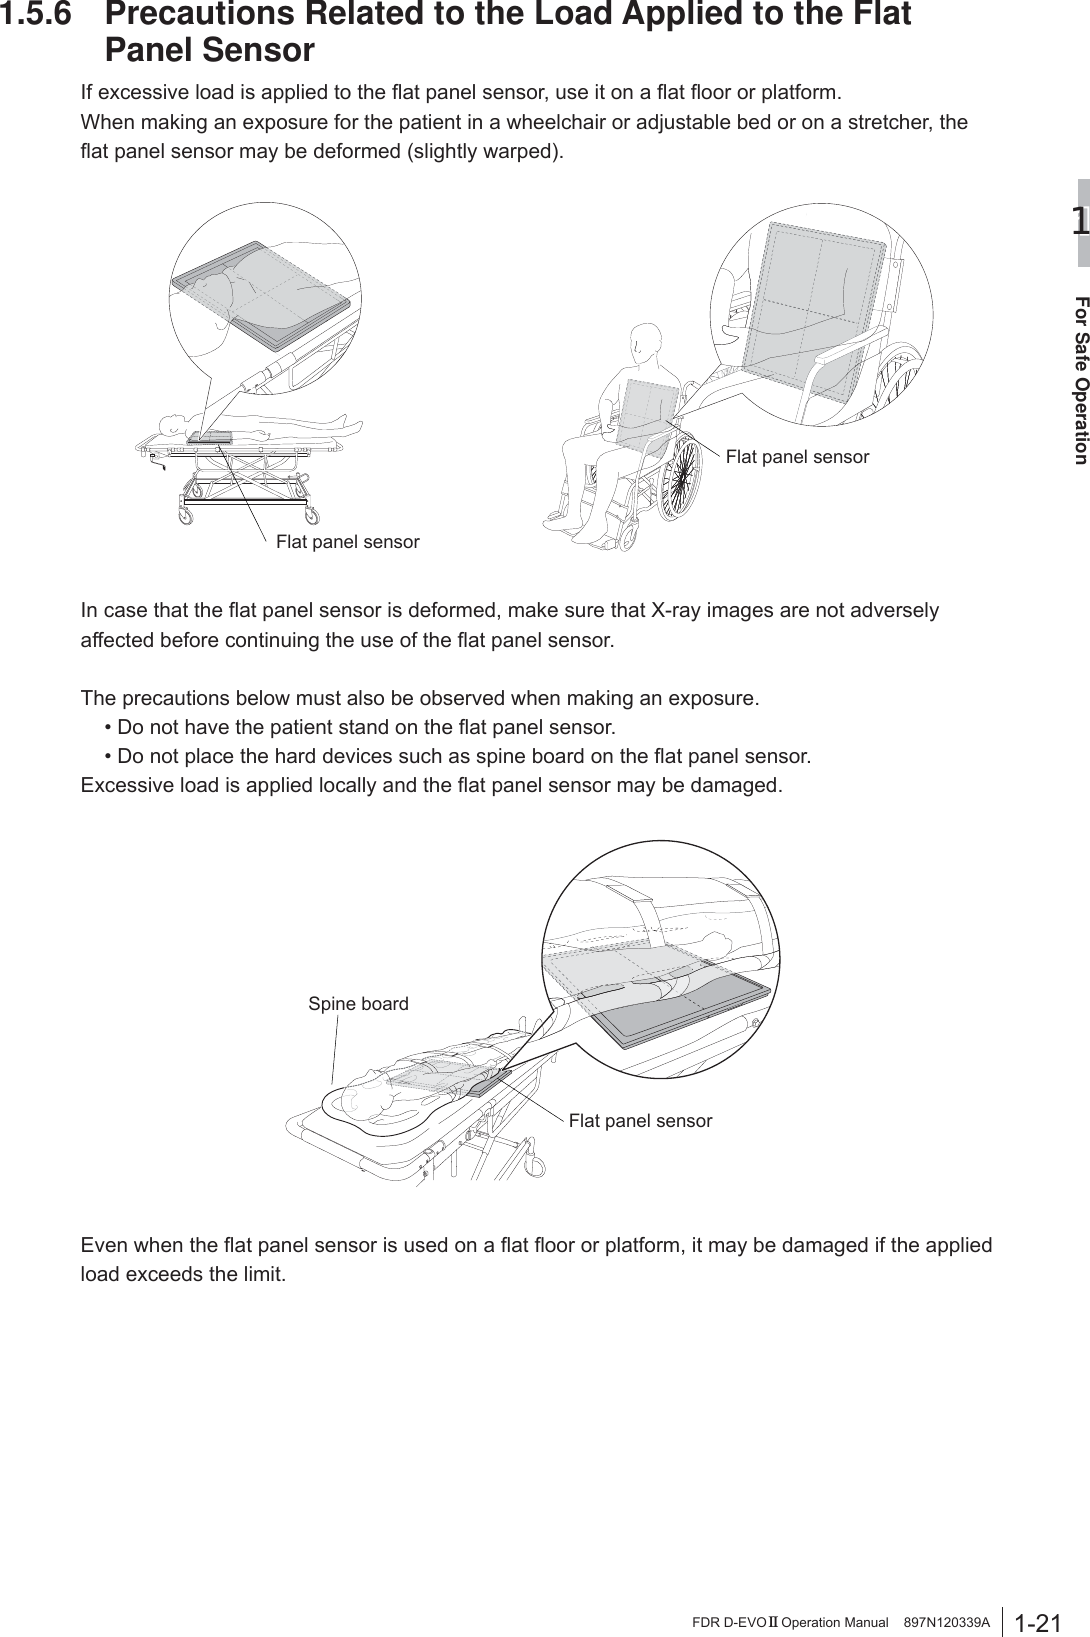 1-21For Safe Operation1FDR D-EVO II Operation Manual    897N120339A1.5.6  Precautions Related to the Load Applied to the Flat Panel Sensor,IH[FHVVLYHORDGLVDSSOLHGWRWKHÀDWSDQHOVHQVRUXVHLWRQDÀDWÀRRURUSODWIRUPWhen making an exposure for the patient in a wheelchair or adjustable bed or on a stretcher, the ÀDWSDQHOVHQVRUPD\EHGHIRUPHGVOLJKWO\ZDUSHGFlat panel sensorFlat panel sensor,QFDVHWKDWWKHÀDWSDQHOVHQVRULVGHIRUPHGPDNHVXUHWKDW;UD\LPDJHVDUHQRWDGYHUVHO\DIIHFWHGEHIRUHFRQWLQXLQJWKHXVHRIWKHÀDWSDQHOVHQVRUThe precautions below must also be observed when making an exposure.  &apos;RQRWKDYHWKHSDWLHQWVWDQGRQWKHÀDWSDQHOVHQVRU &apos;RQRWSODFHWKHKDUGGHYLFHVVXFKDVVSLQHERDUGRQWKHÀDWSDQHOVHQVRU([FHVVLYHORDGLVDSSOLHGORFDOO\DQGWKHÀDWSDQHOVHQVRUPD\EHGDPDJHGFlat panel sensorSpine board(YHQZKHQWKHÀDWSDQHOVHQVRULVXVHGRQDÀDWÀRRURUSODWIRUPLWPD\EHGDPDJHGLIWKHDSSOLHGload exceeds the limit.